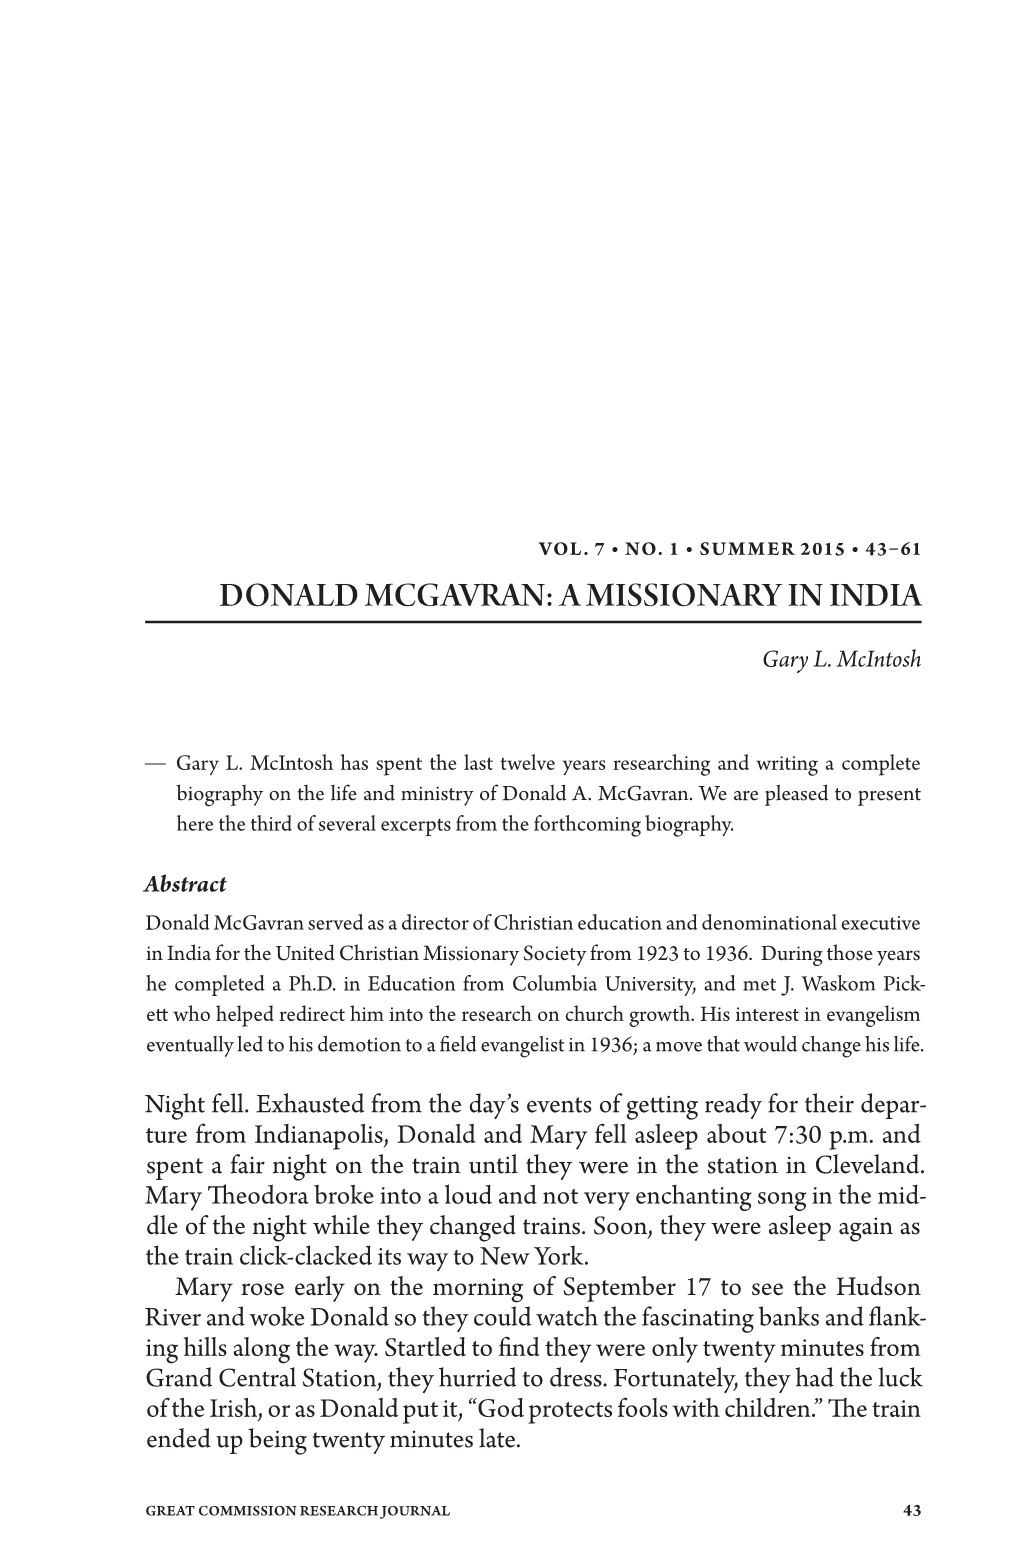 Donald Mcgavran: a Missionary in India